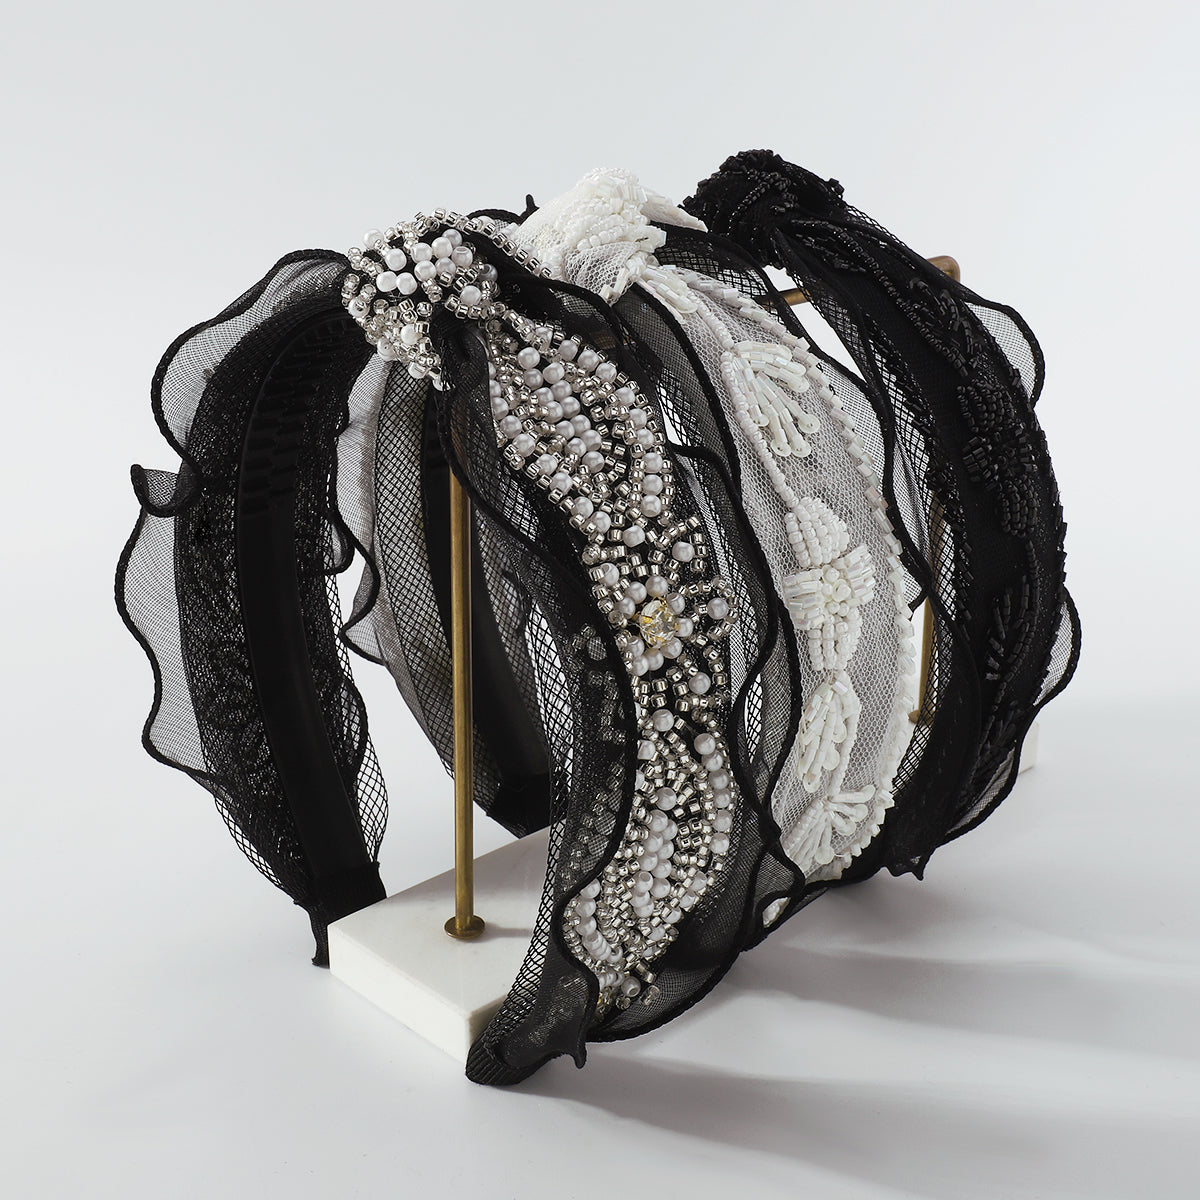 Vintage Black Lace Beads Knotted Headband medyjewelry